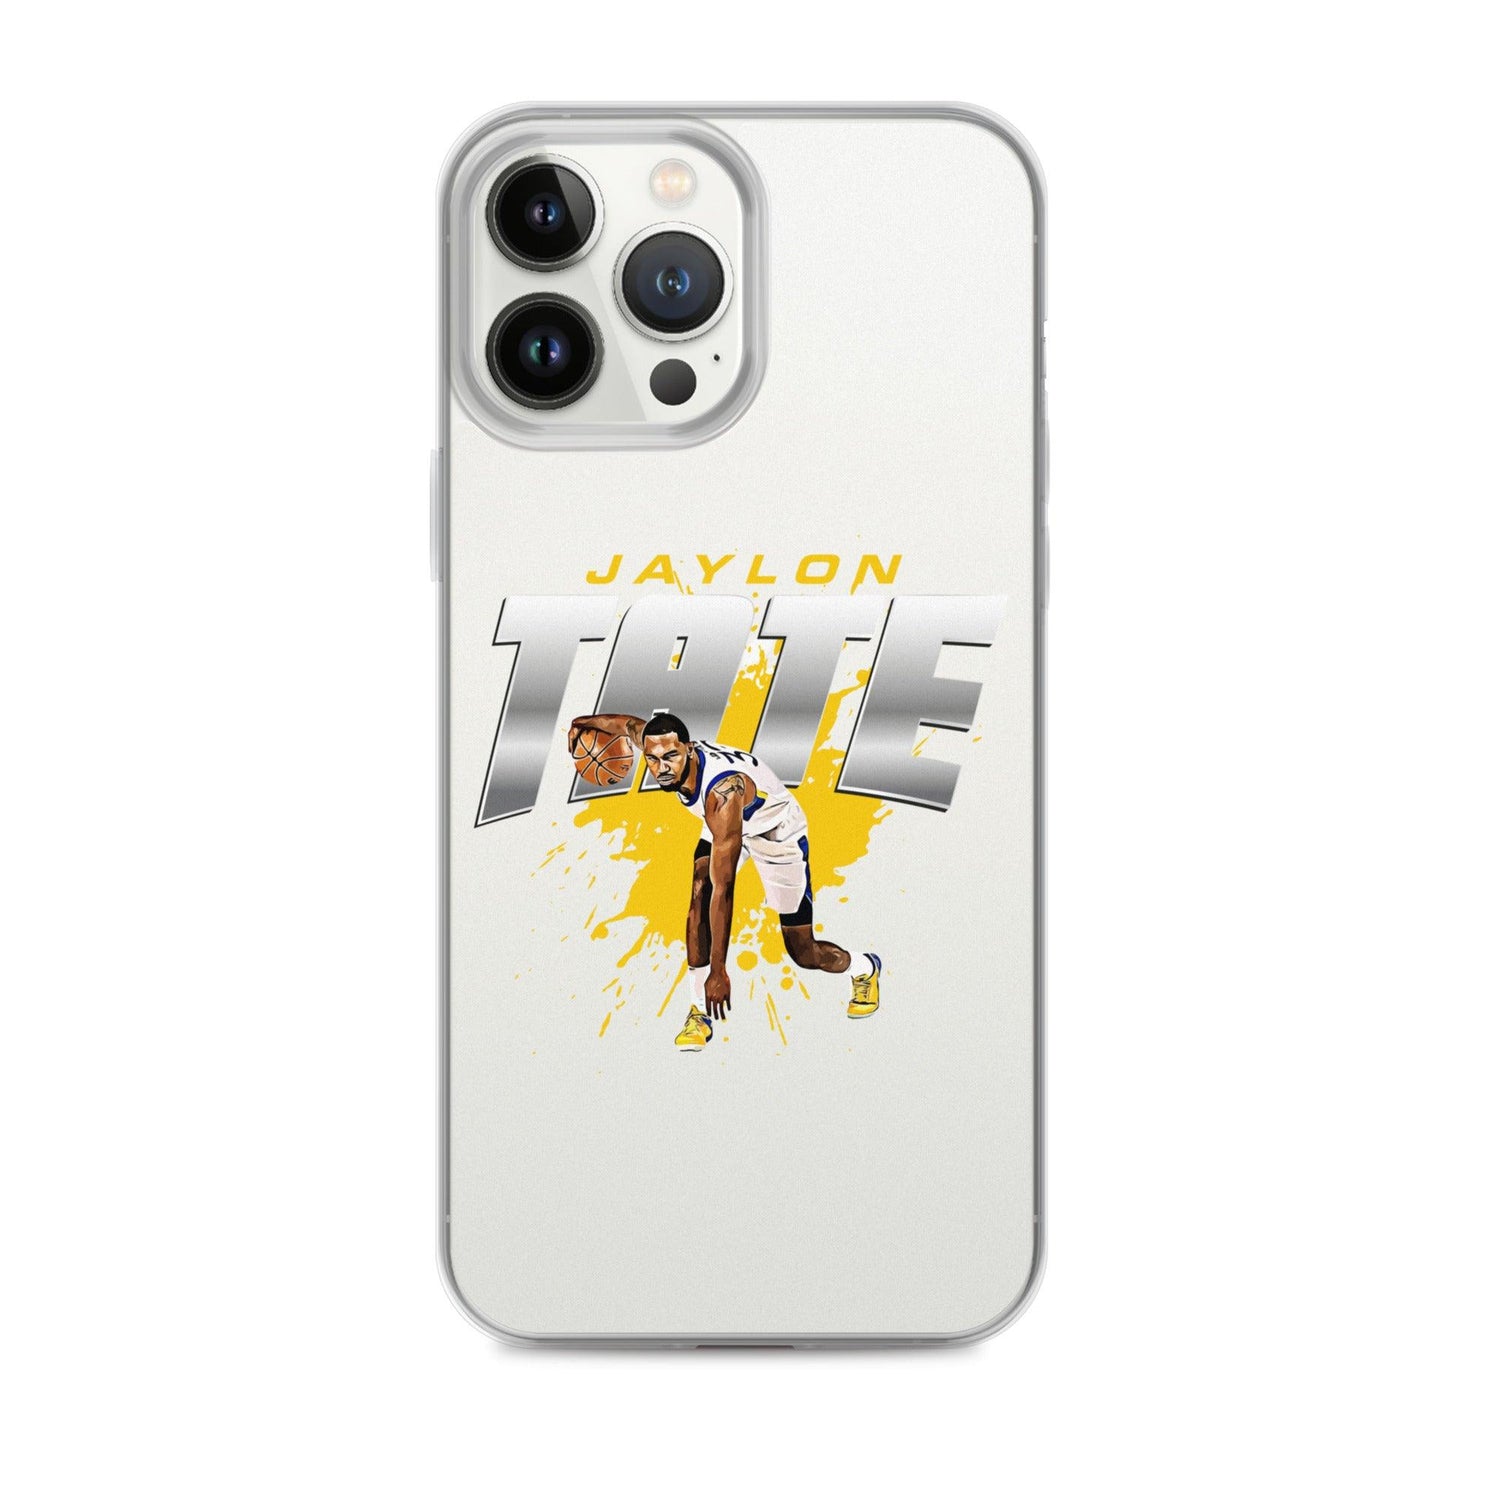 Jaylon Tate "Gameday" iPhone Case - Fan Arch